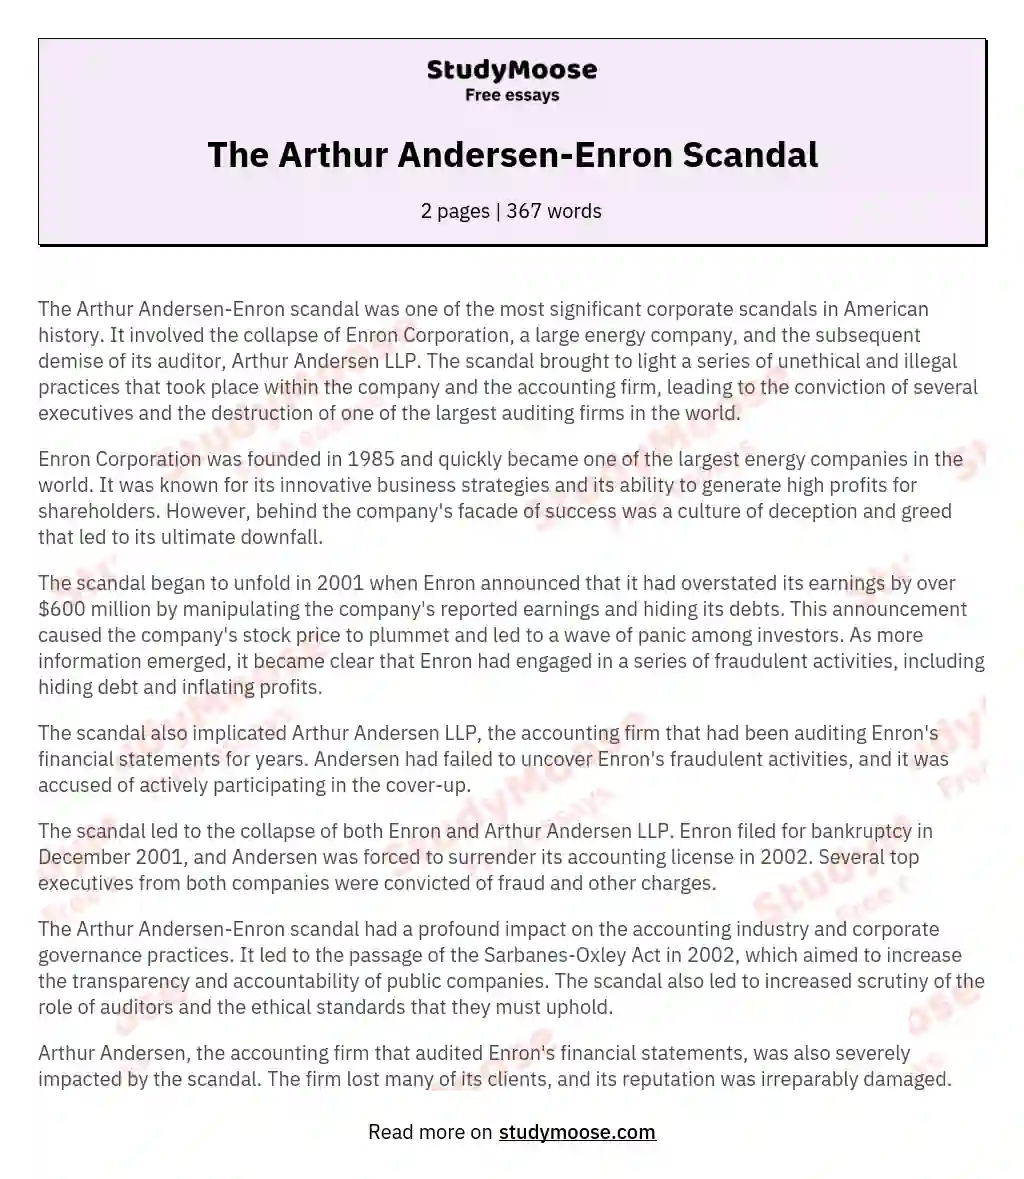 The Arthur Andersen-Enron Scandal essay